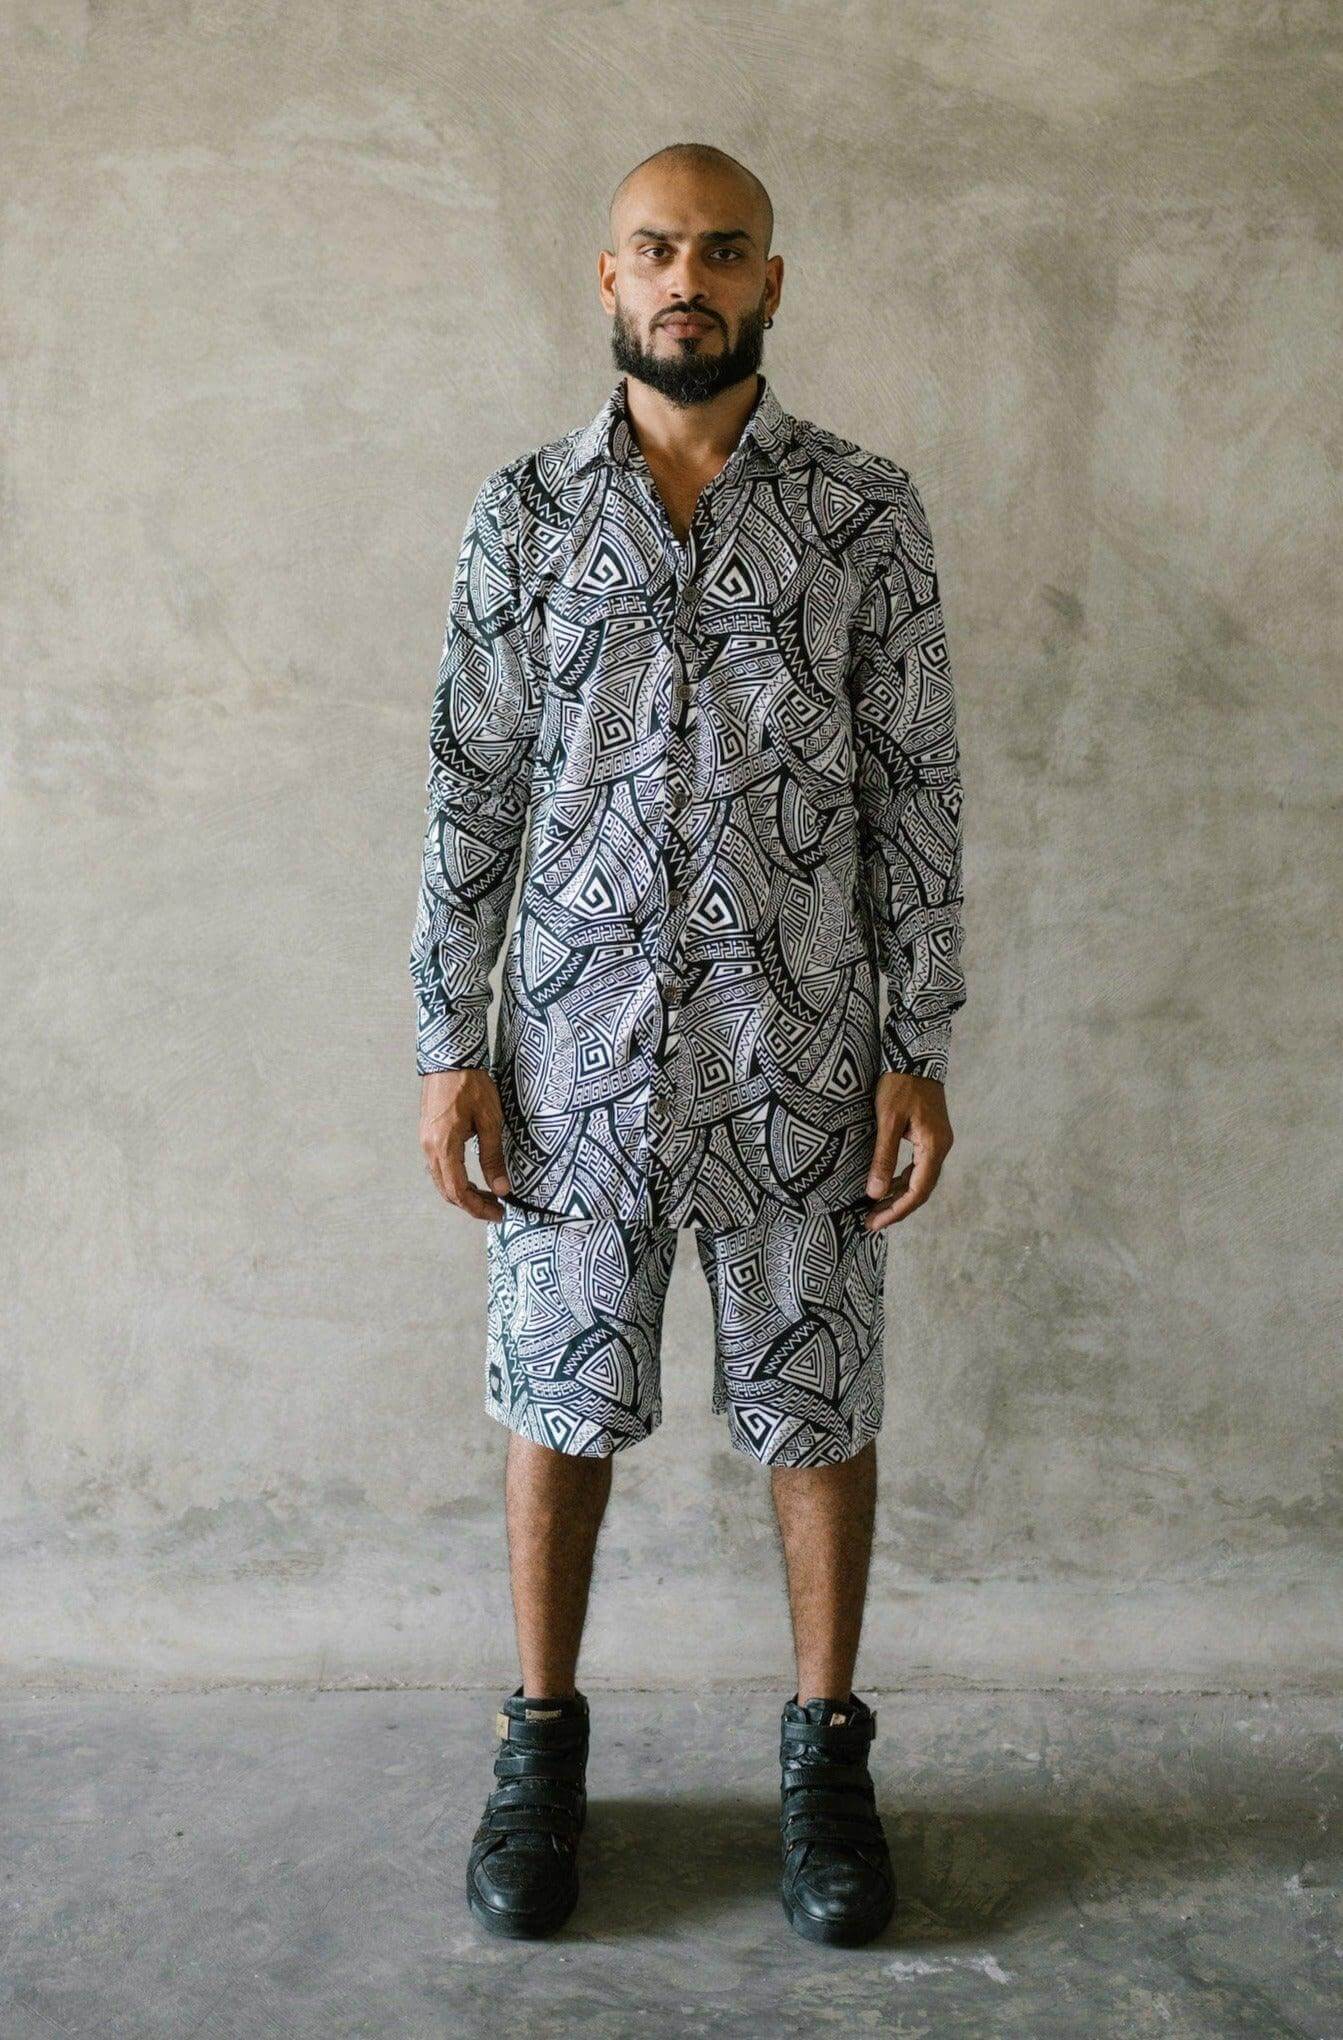 VALOdesigns Pants Black & Gold VALO SPIRIT PANTAI SHORTS Black & White Tribal - Light cotton summer shorts with designer art work print